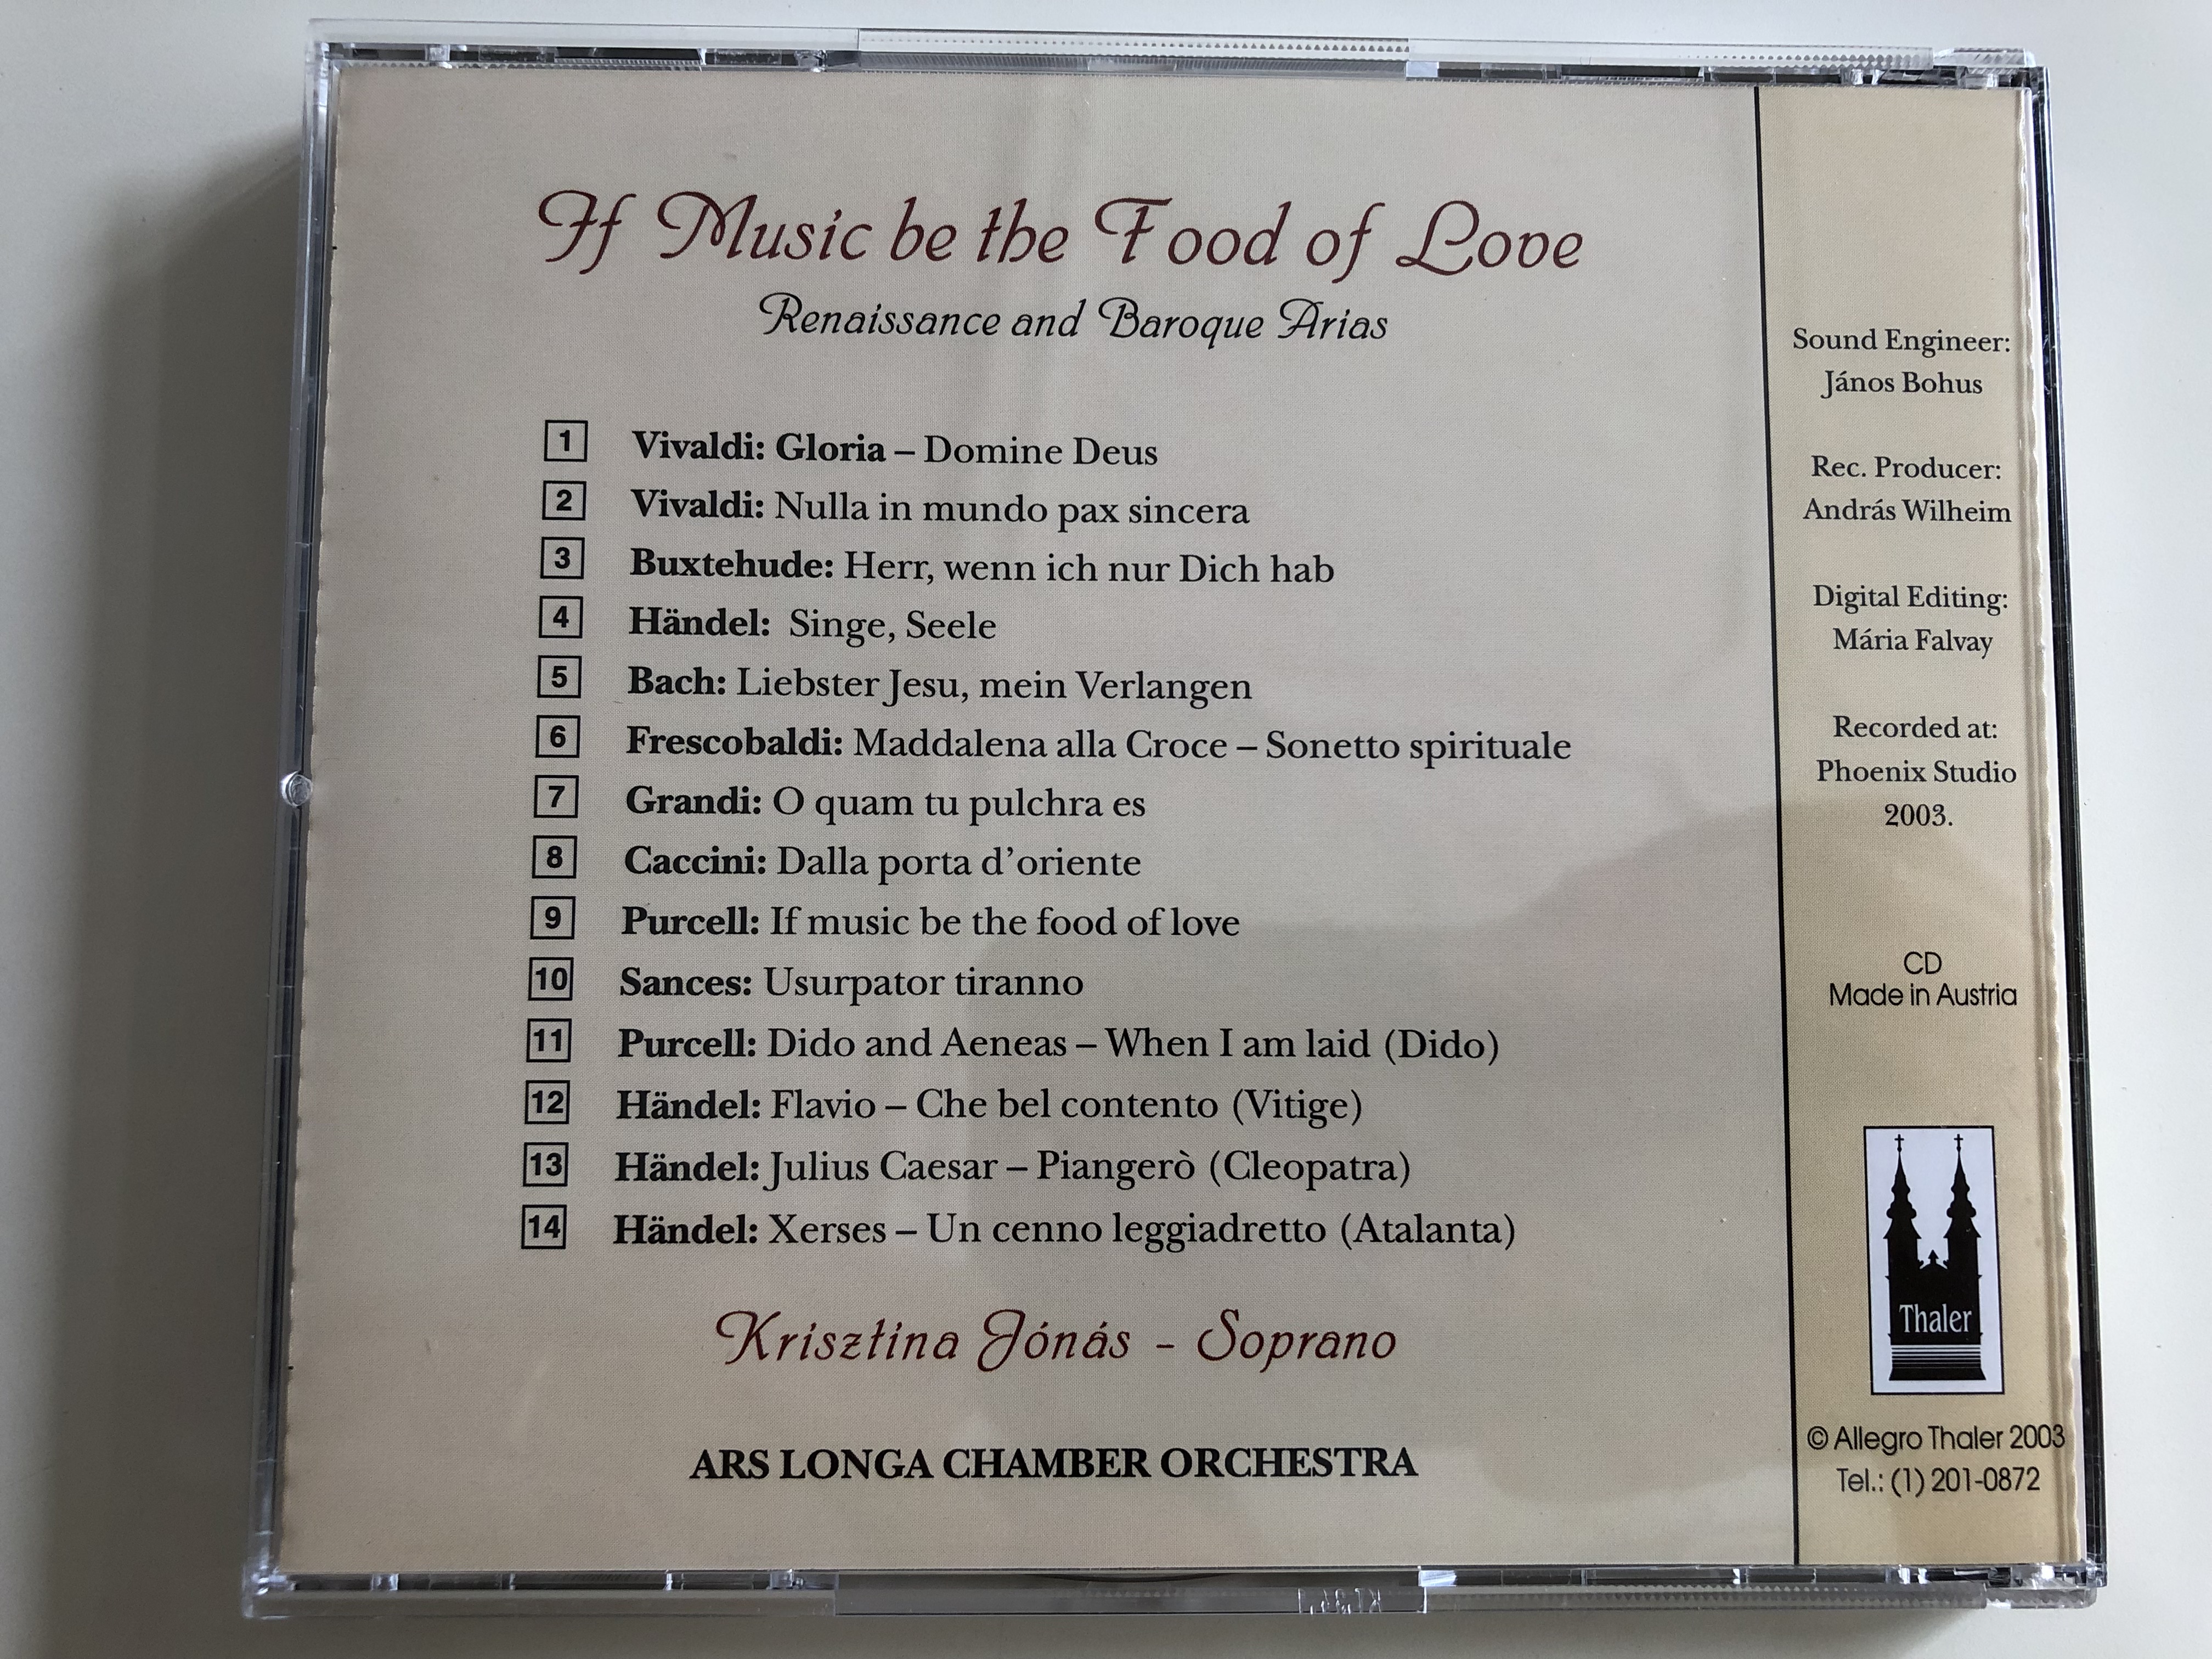 krisztina-jonas-soprano-if-music-be-the-food-of-love-renaissance-and-baroque-arias-allegro-thaler-audio-cd-2003-mza-068-9-.jpg